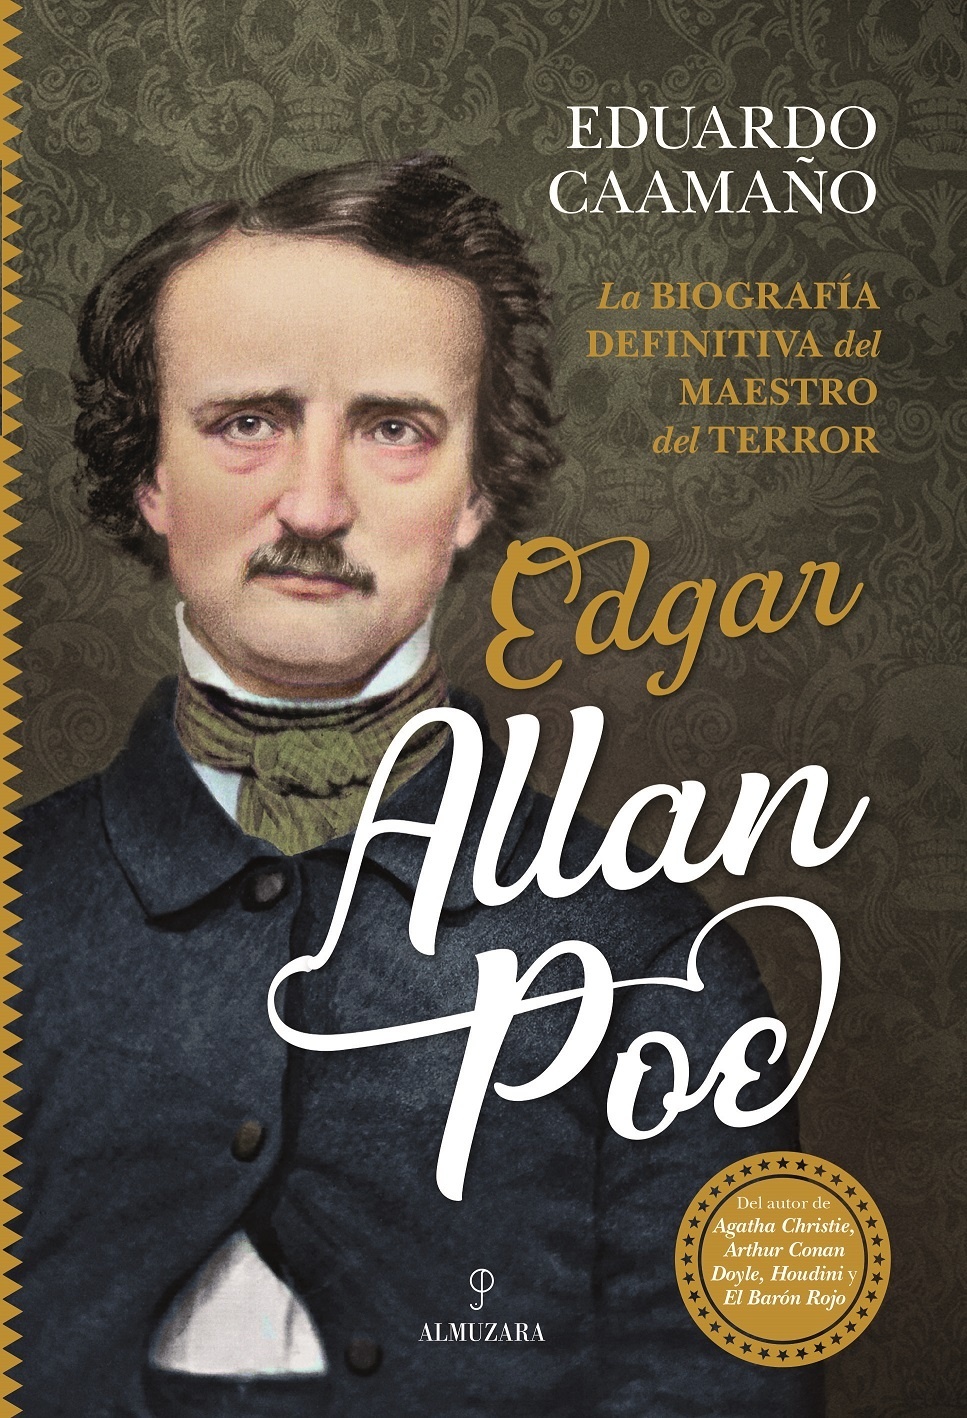 Edgar Allan Poe. 